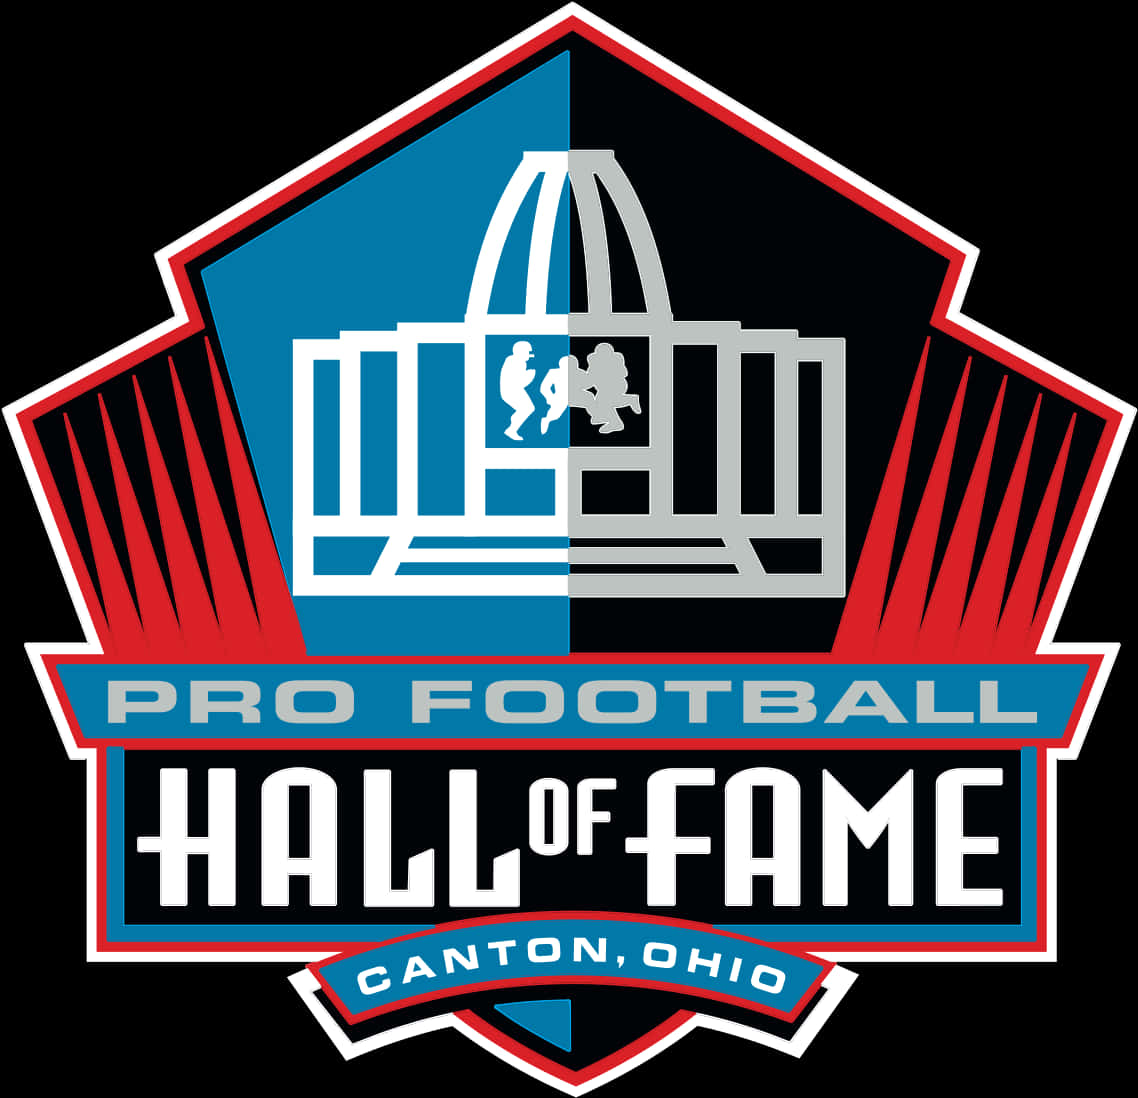 Pro Football Hallof Fame Logo PNG image